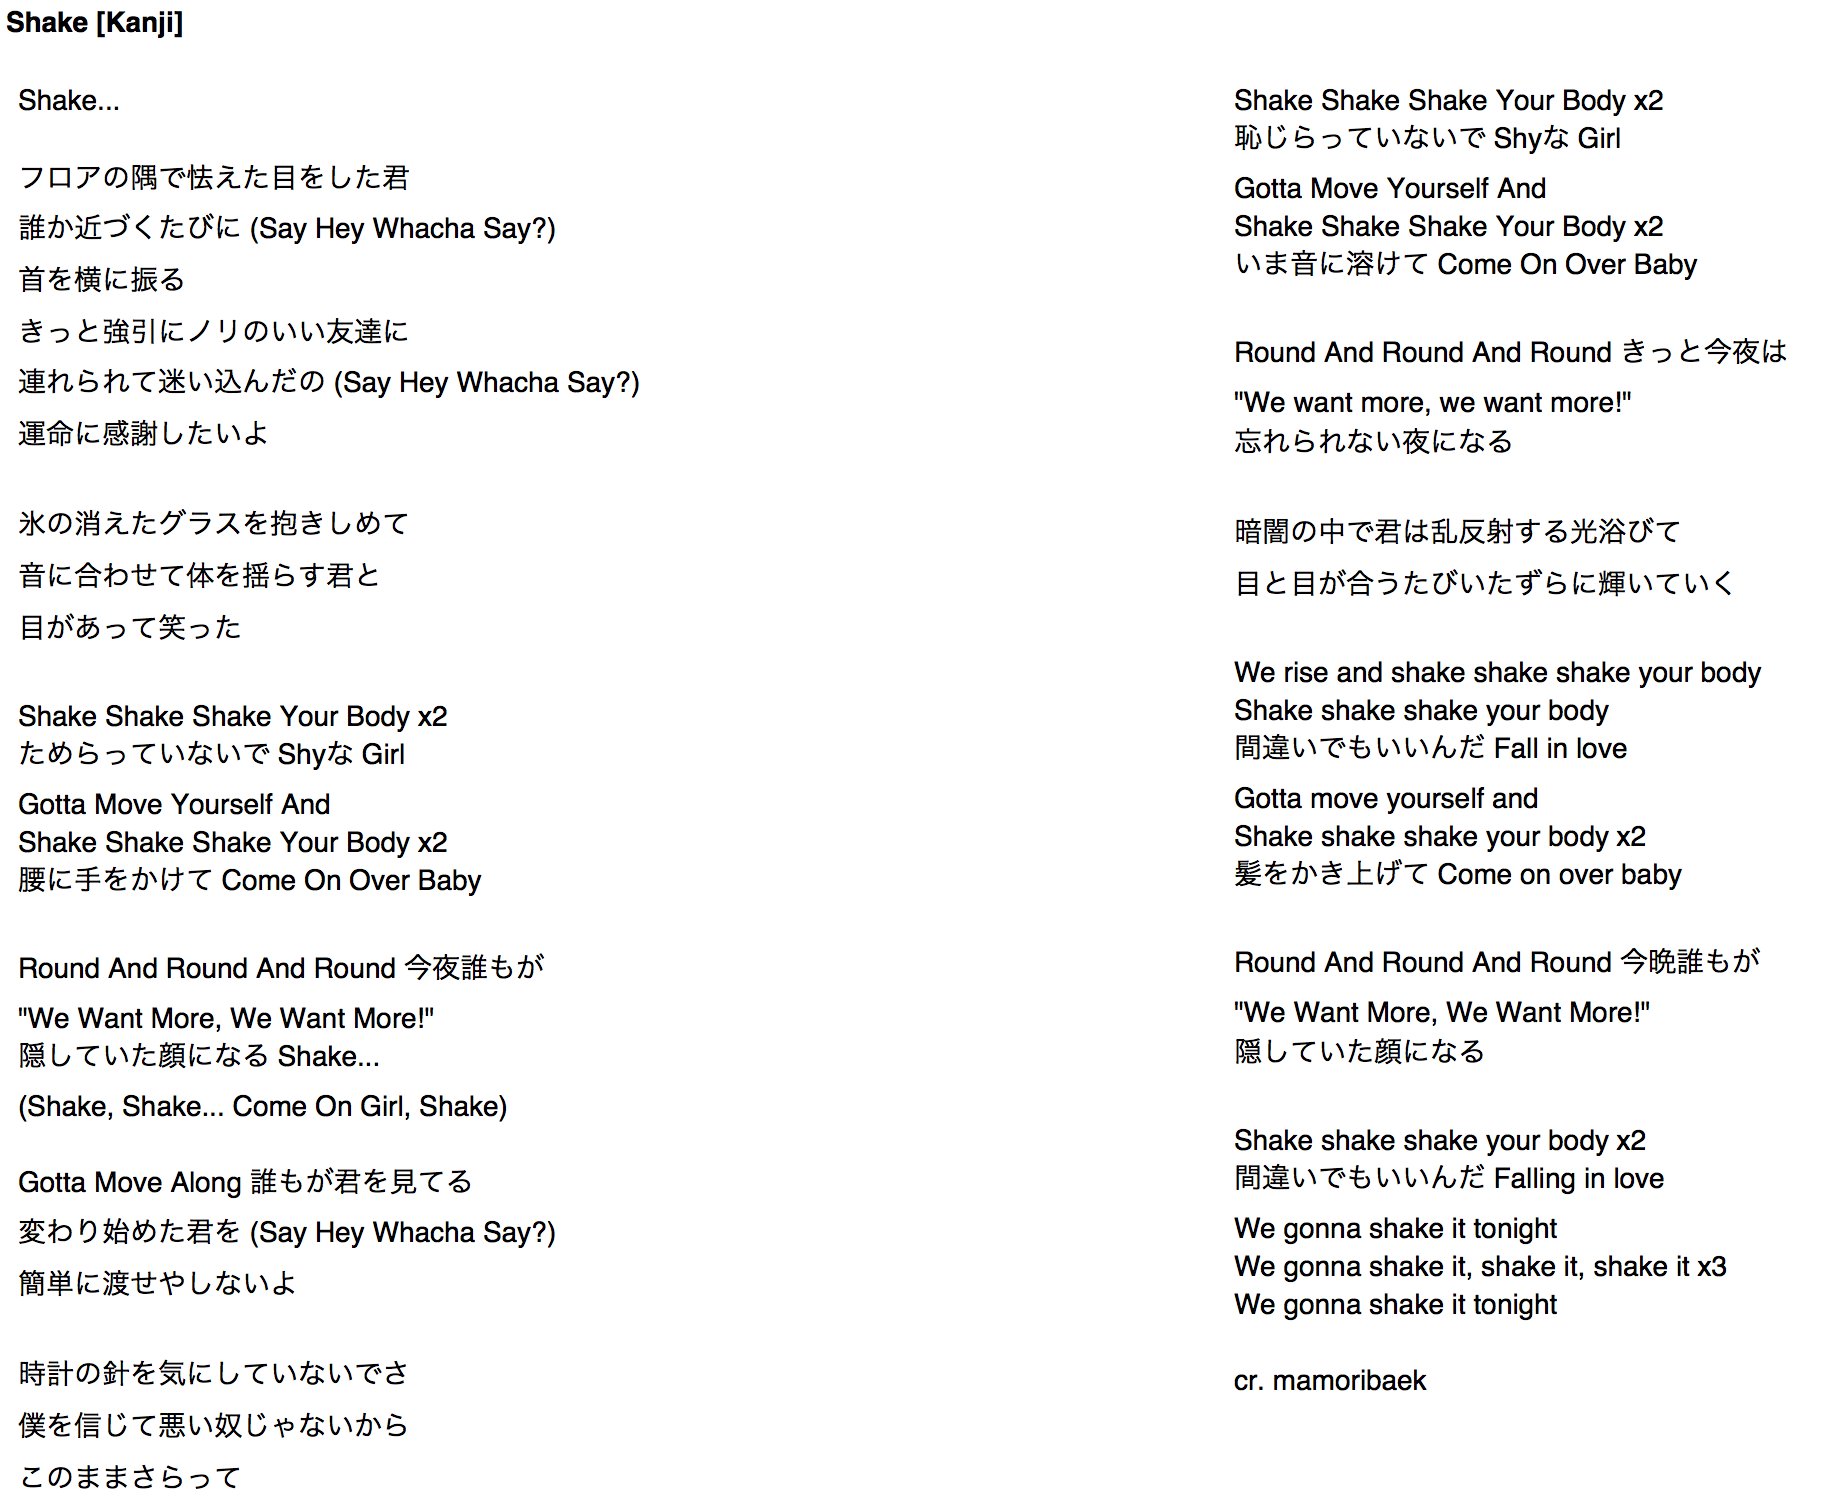 BBAEK 'ㅅ' ALLEY  ENGLISH ONLY on X: Romaji and Kanji lyrics for